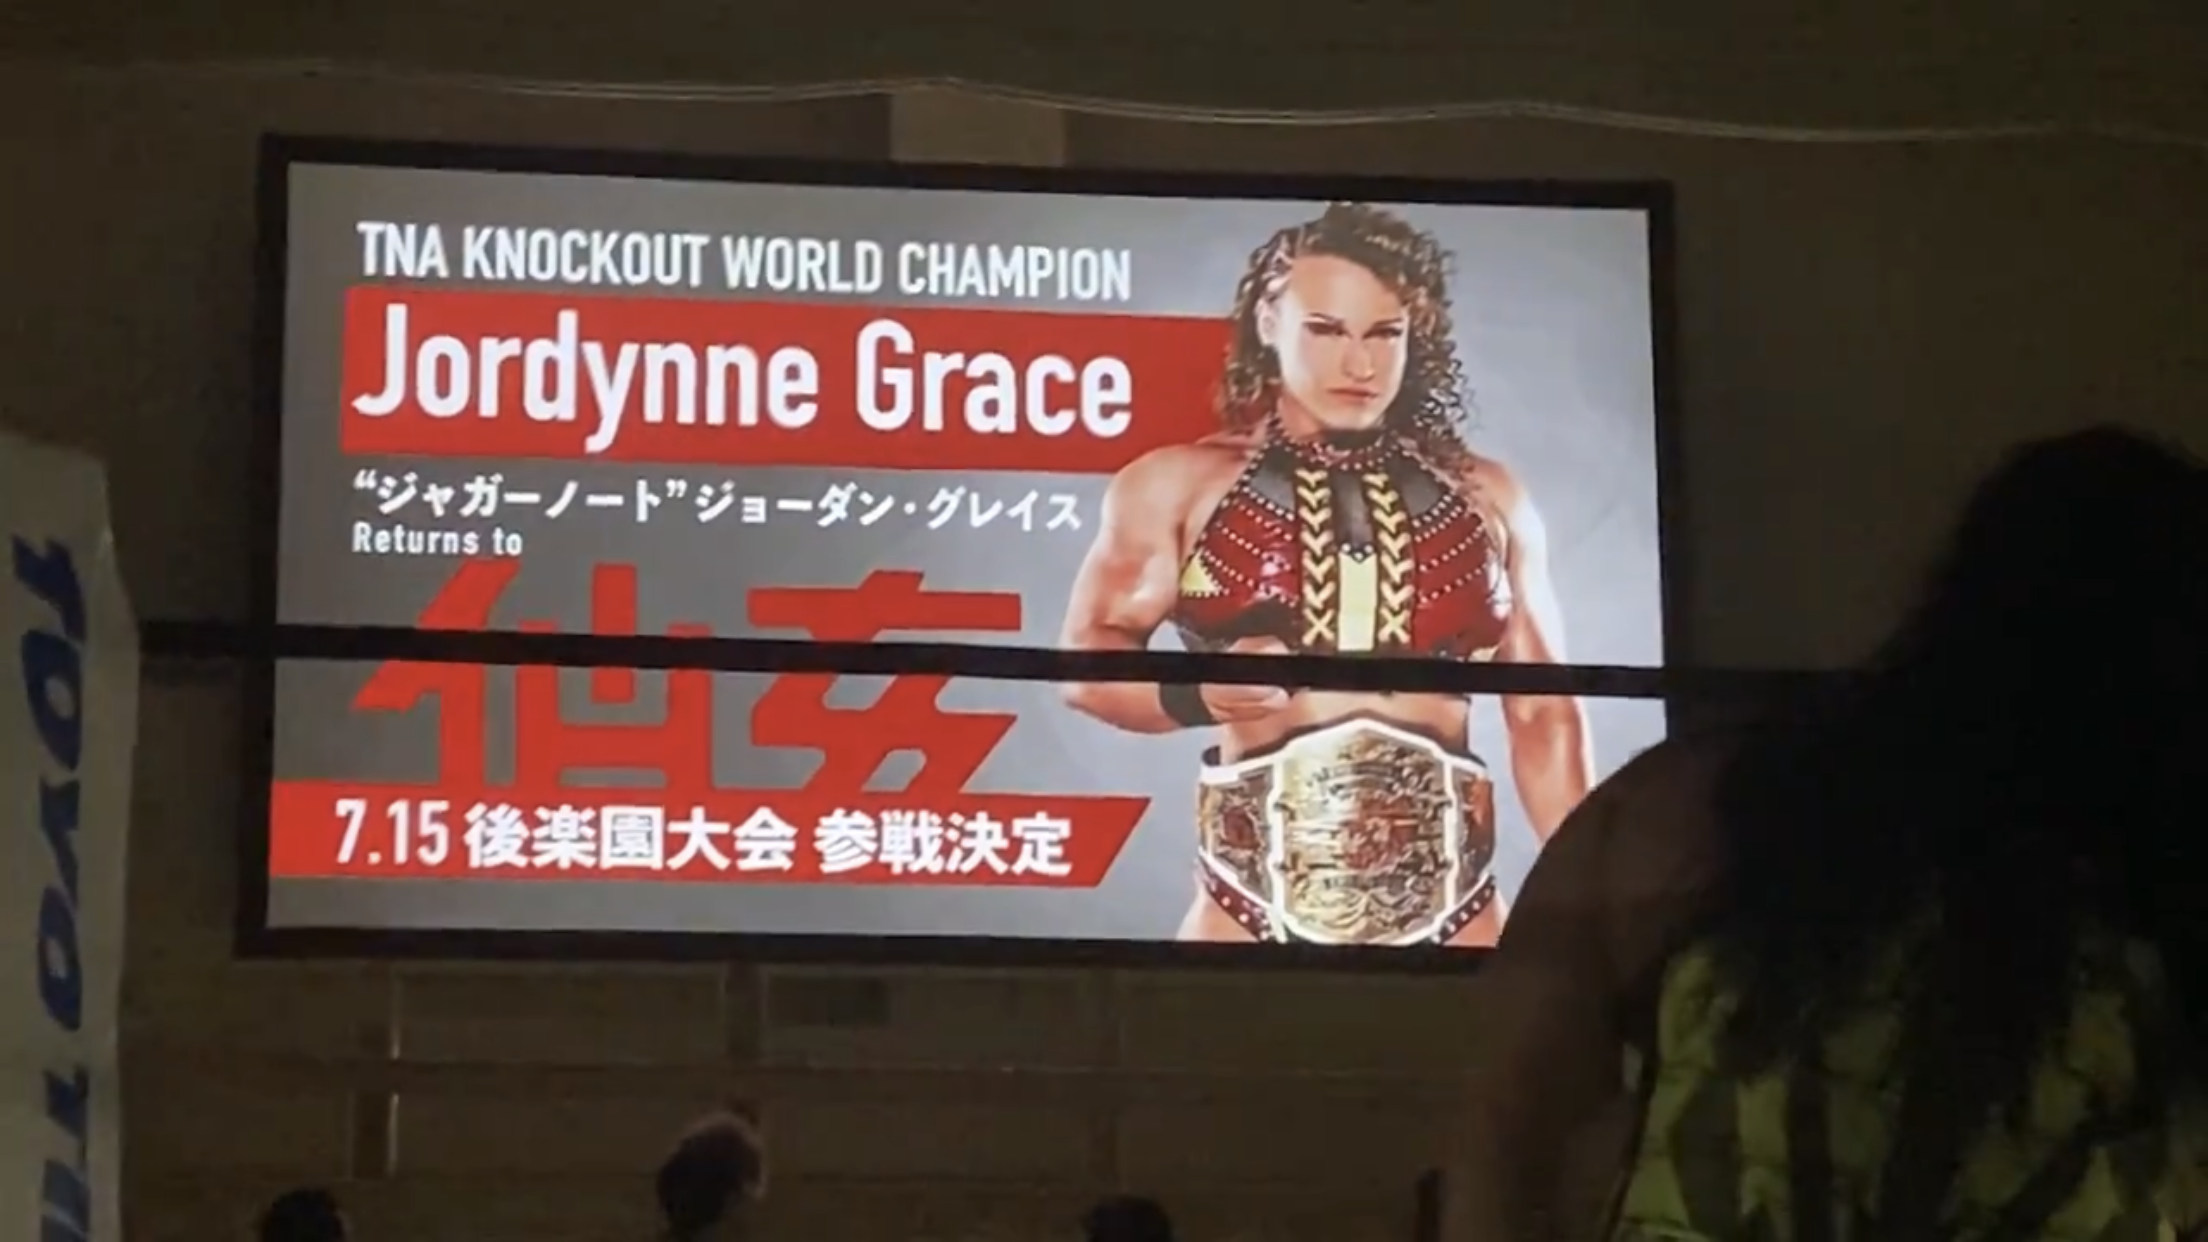 TNA Knockouts World Champion Jordynne Grace Lays Out Challenge At Senjo Sendai Girls’ Show In Japan On July 15